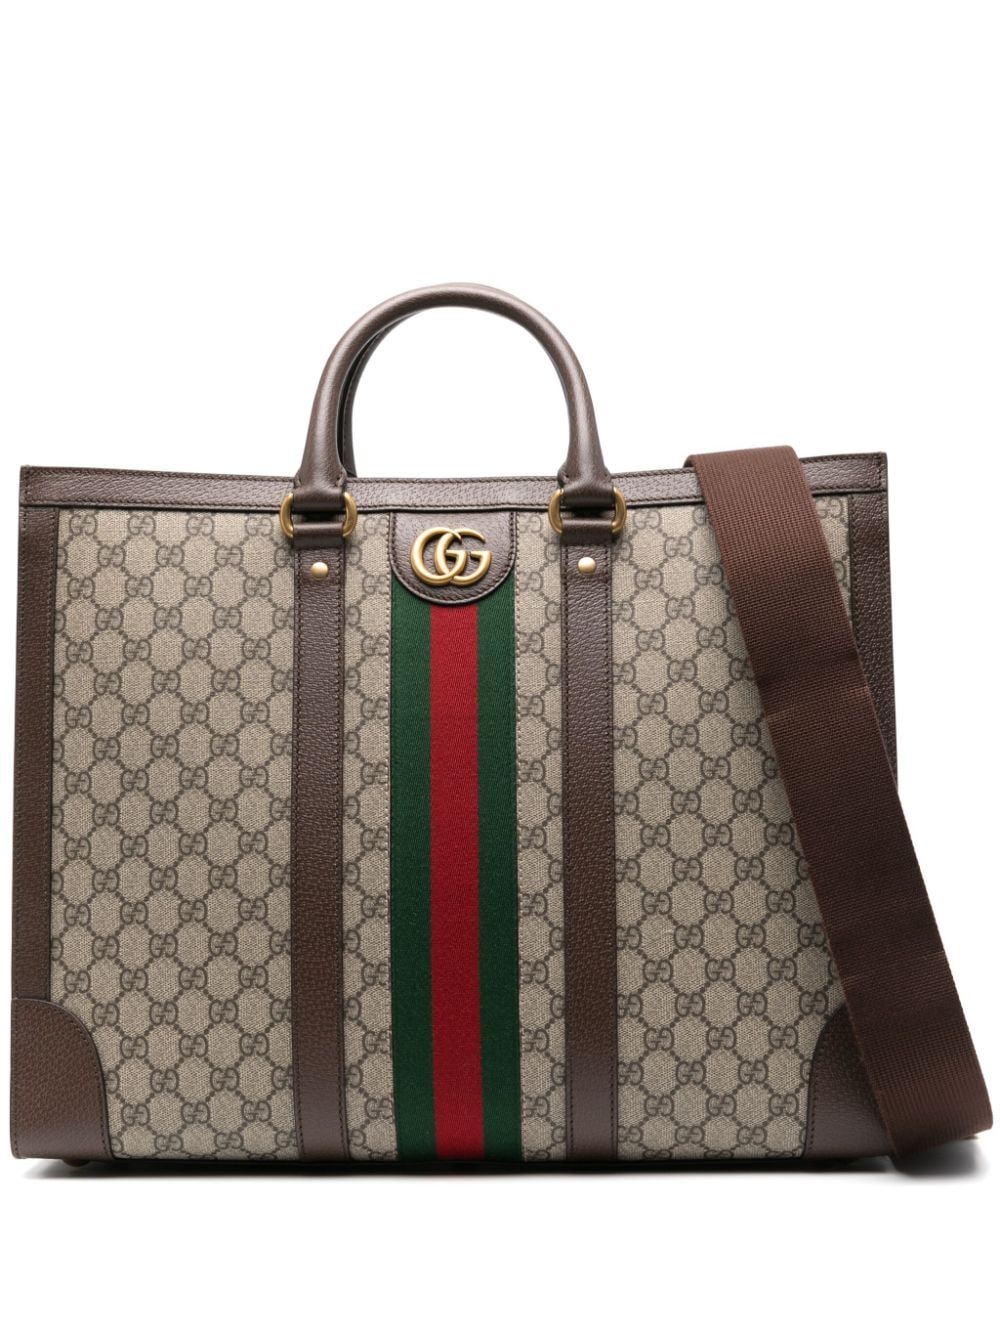 Gucci large Ophidia tote bag - Neutrals von Gucci